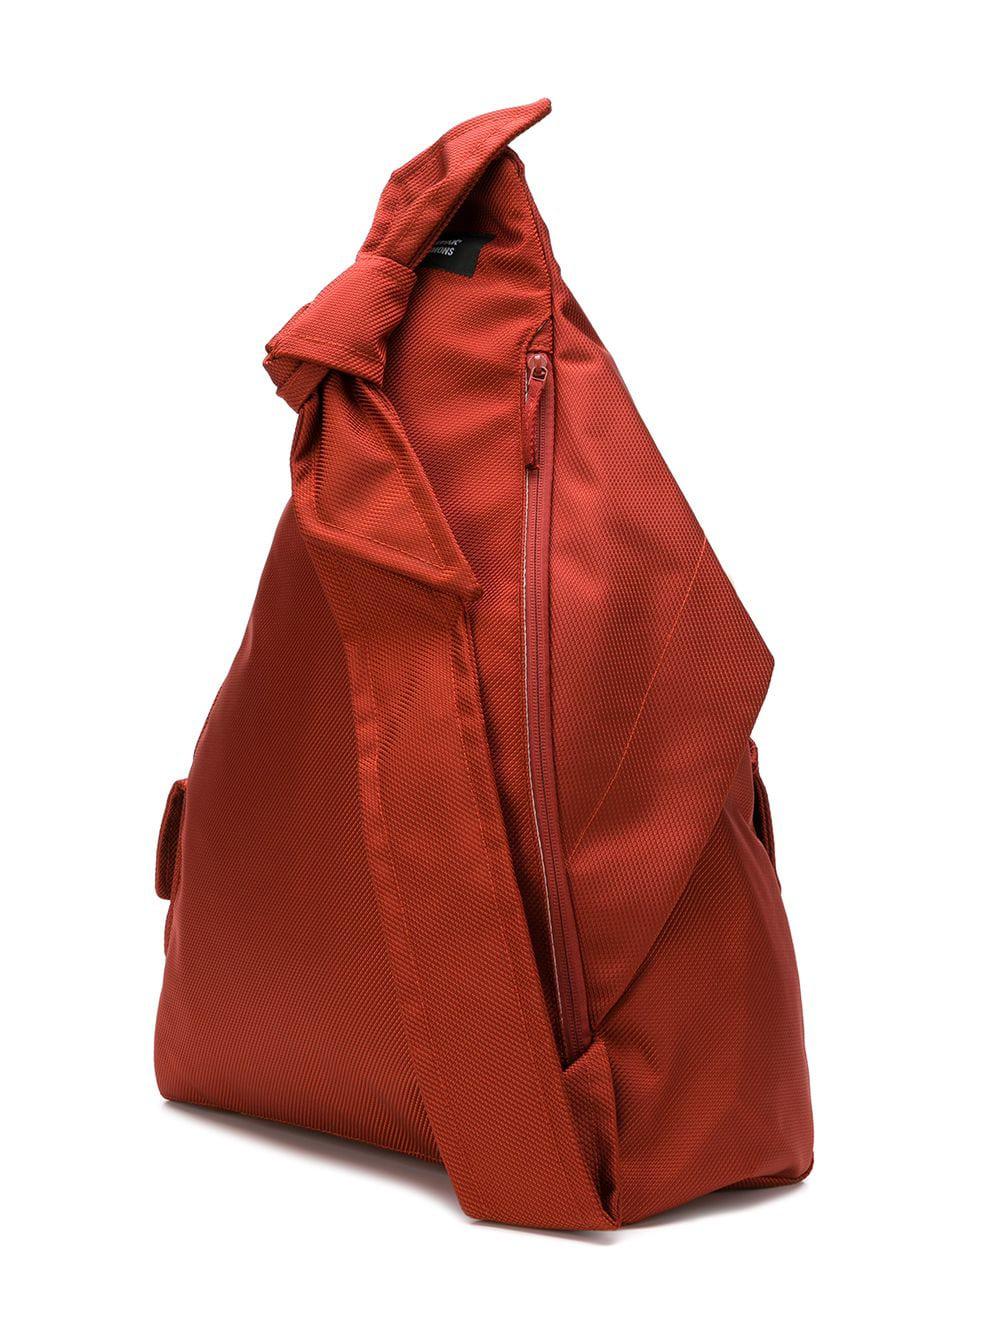 Eastpak x Raf Simons Sleek Sling Backpack Black Refined